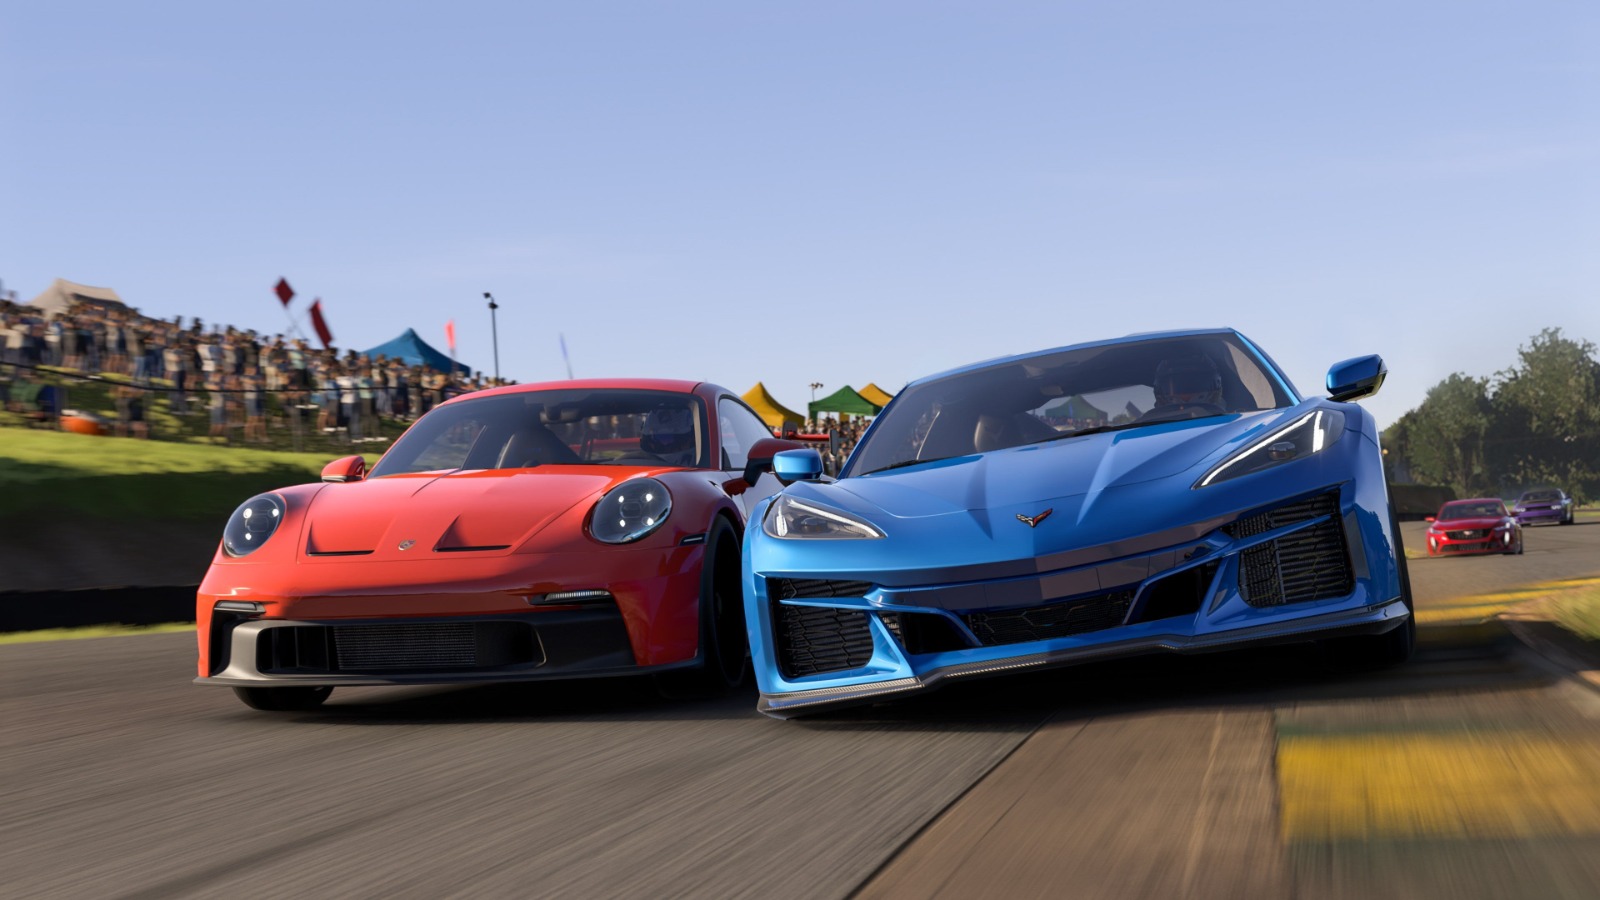 Forza Motorsport: ¿Vale la pena? 